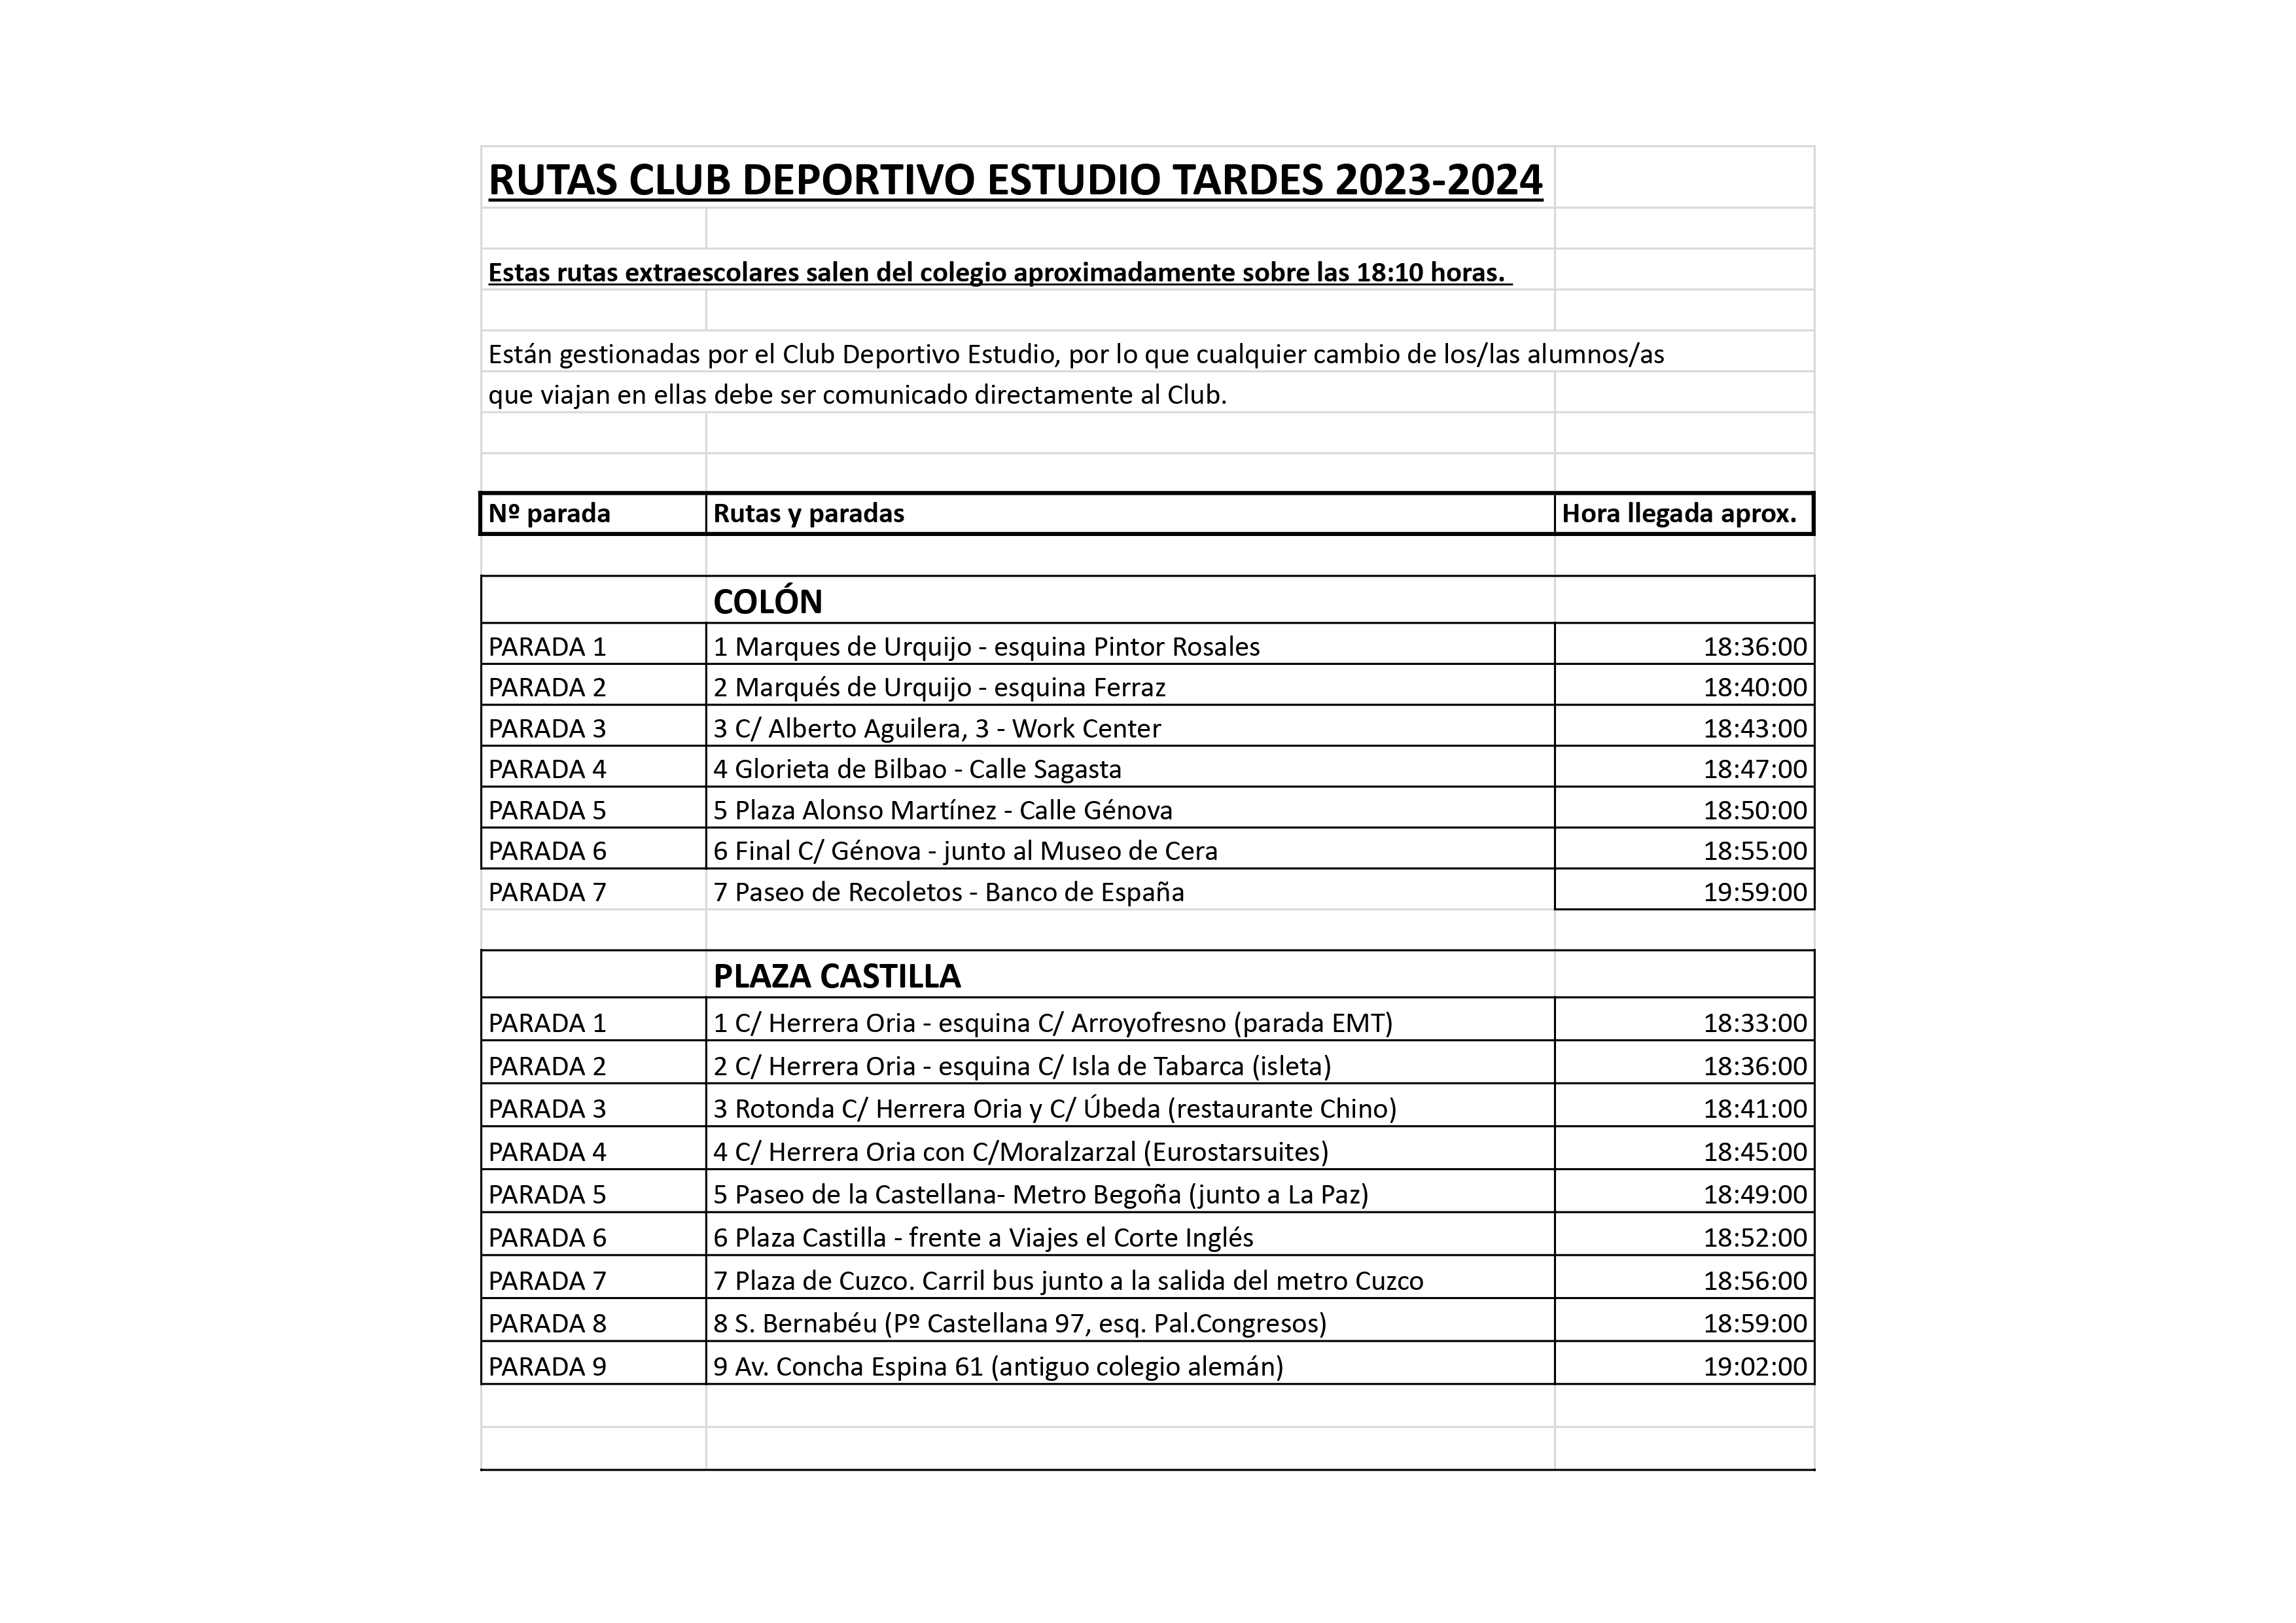 Rutas Club Deportivo Estudio tardes, itinerarios curso 2023-24, a 2023.09.10.xlsx - WEB_page-0001.jpg